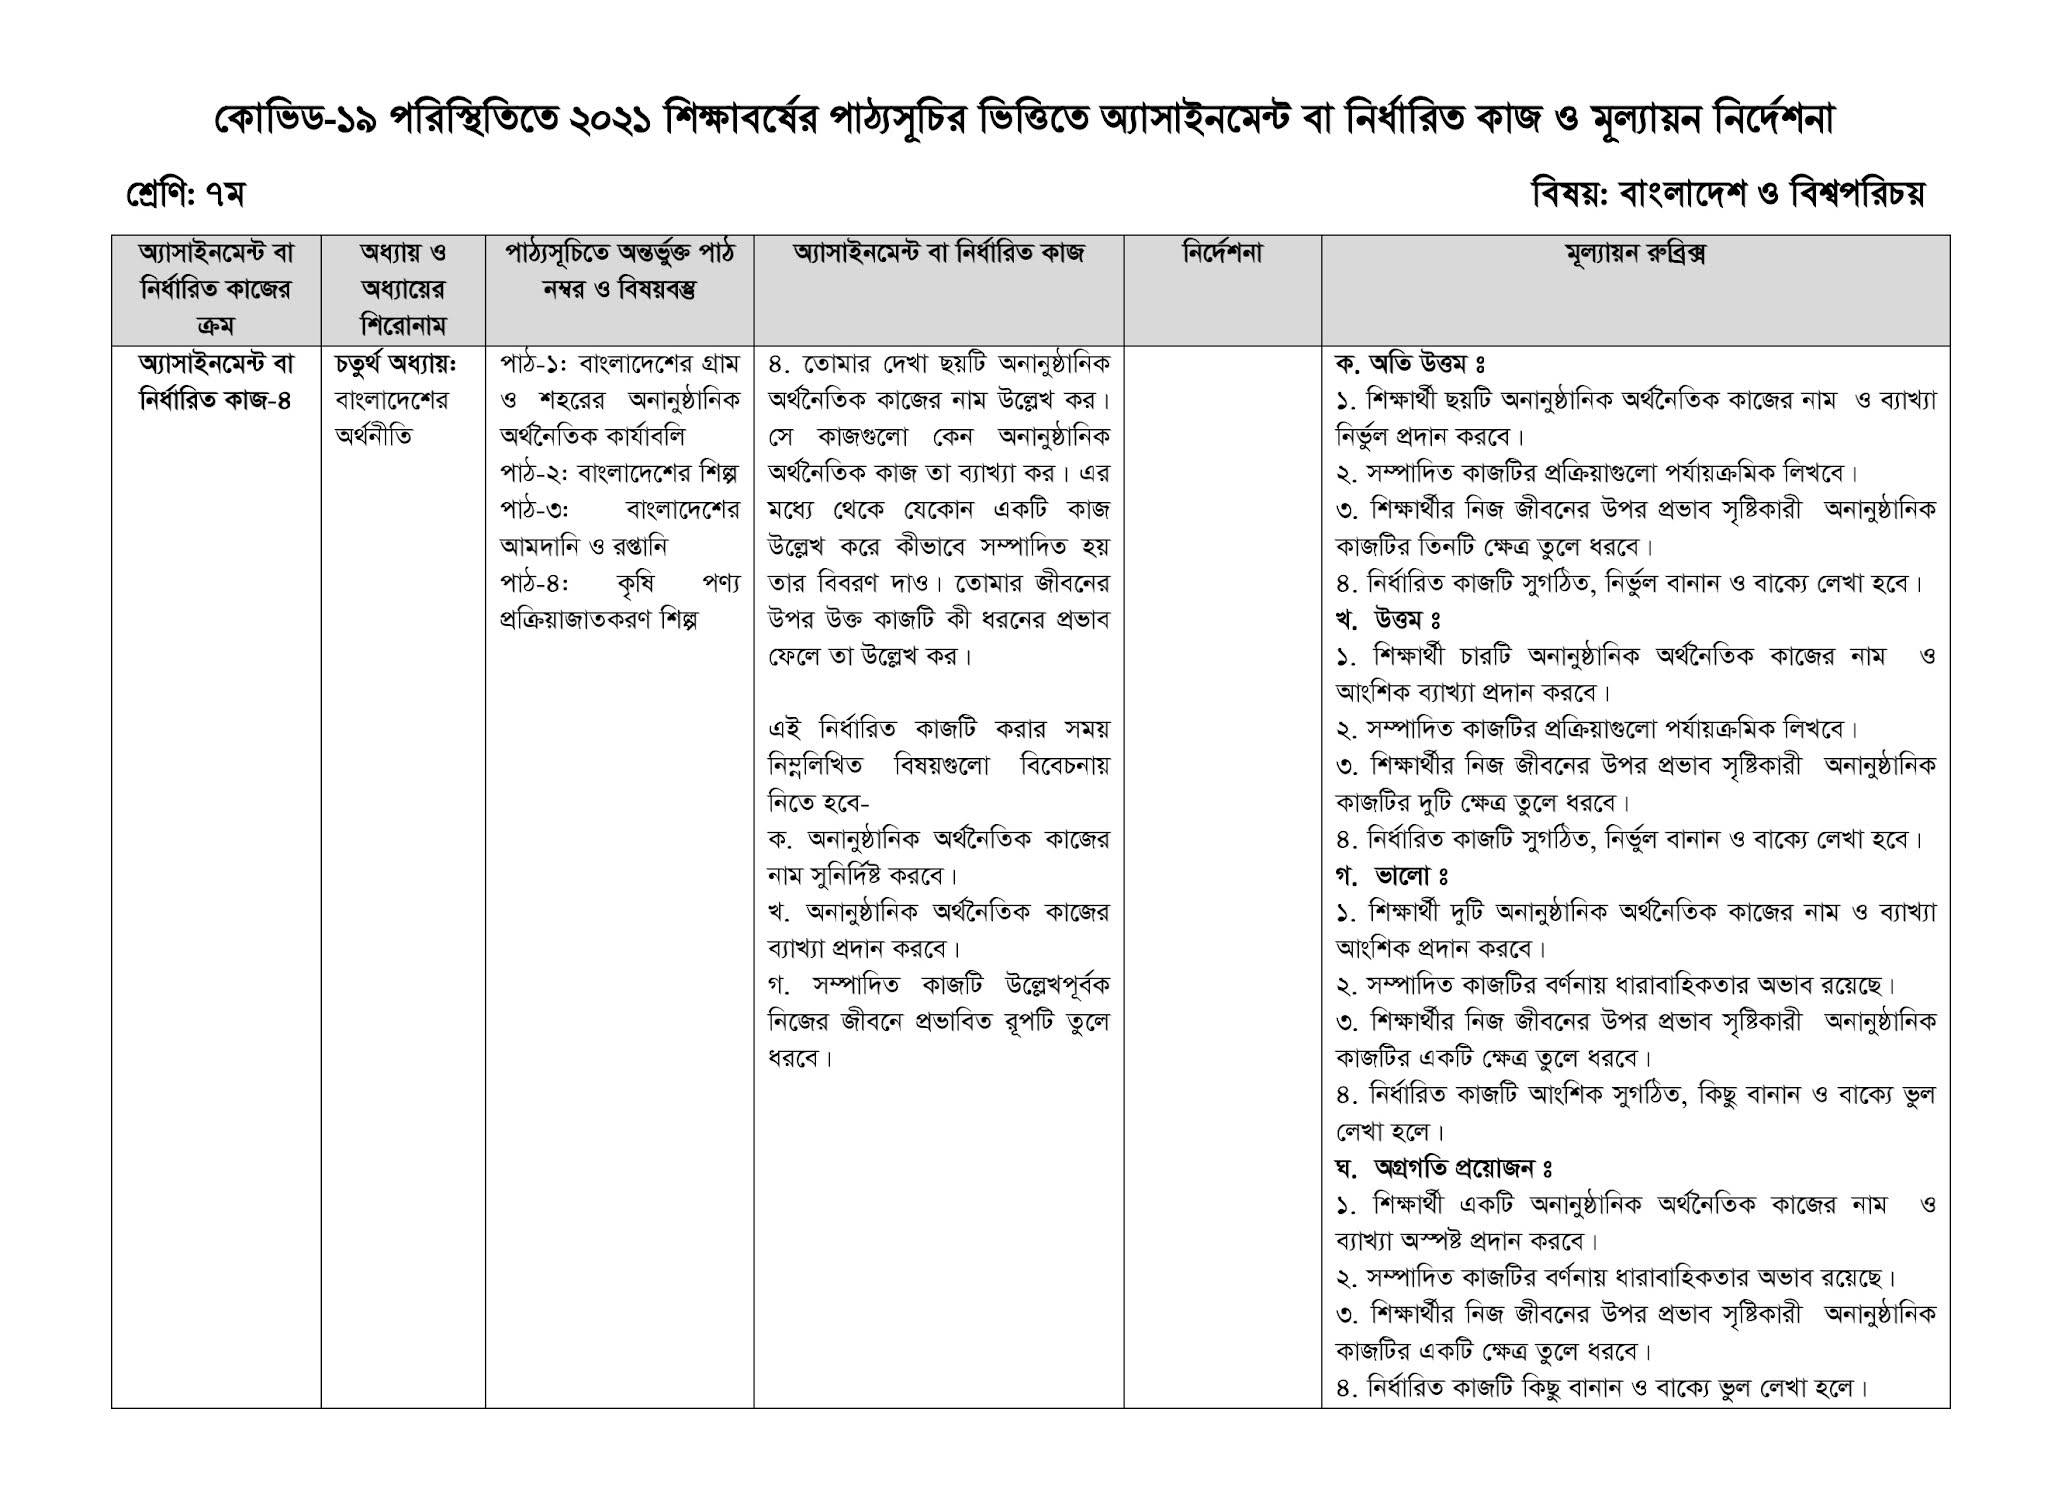 Tags: সপ্তম শ্রেণির ২০তম সপ্তাহের বাংলাদেশ ও বিশ্বপরিচয় এসাইনমেন্ট উত্তর সমাধান ২০২১, সপ্তম শ্রেণি বাংলাদেশ ও বিশ্বপরিচয় অ্যাসাইনমেন্ট উত্তর ২০২১ | ২০তম সপ্তাহ, সপ্তম শ্রেণি বাংলাদেশ ও বিশ্বপরিচয় অ্যাসাইনমেন্ট সমাধান ২০২১, Class seven 20th week bangladesh o bisho porichoy assignment answer solution 2021, class 7 bangladesh o bisho porichoy assignment answer 2021 20th week, বাংলাদেশ ও বিশ্বপরিচয় এসাইনমেন্ট সমাধান উত্তর , সপ্তম শ্রেণীর অ্যাসাইনমেন্ট বাংলাদেশ ও বিশ্বপরিচয় সমাধান, ৭ম শ্রেণির ২০ তম সপ্তাহের এসাইনমেন্ট বাংলাদেশ ও বিশ্বপরিচয়, ৭ম শ্রেণির এসাইনমেন্ট ২০ সপ্তাহের বাংলাদেশ ও বিশ্বপরিচয়, সপ্তম শ্রেণীর অ্যাসাইনমেন্ট বাংলাদেশ ও বিশ্ব পরিচয় ২০তম সপ্তাহ, সপ্তম শ্রেণীর অ্যাসাইনমেন্ট ২০২১ সমাধান ইংরেজি, সপ্তম শ্রেণীর অ্যাসাইনমেন্ট বাংলাদেশ ও বিশ্ব পরিচয় ২০ম সপ্তাহ, ৭ম শ্রেণির এসাইনমেন্ট বাংলাদেশ ও বিশ্বপরিচয় ২০ম সপ্তাহ, বাংলাদেশ ও বিশ্বপরিচয় অ্যাসাইনমেন্ট ৭ম শ্রেণি, ৭ম শ্রেণির ২০ সপ্তাহের অ্যাসাইনমেন্ট বাংলাদেশ ও বিশ্বপরিচয়, বাংলাদেশ ও বিশ্বপরিচয় অ্যাসাইনমেন্ট সপ্তম শ্রেণি, বাংলাদেশ ও বিশ্বপরিচয় অ্যাসাইনমেন্ট এর উত্তর, Class 7 assignment 2021 বাংলাদেশ ও বিশ্বপরিচয় answer, ৭ম শ্রেণির ২০তম সপ্তাহের অ্যাসাইনমেন্ট বাংলাদেশ ও বিশ্বপরিচয়